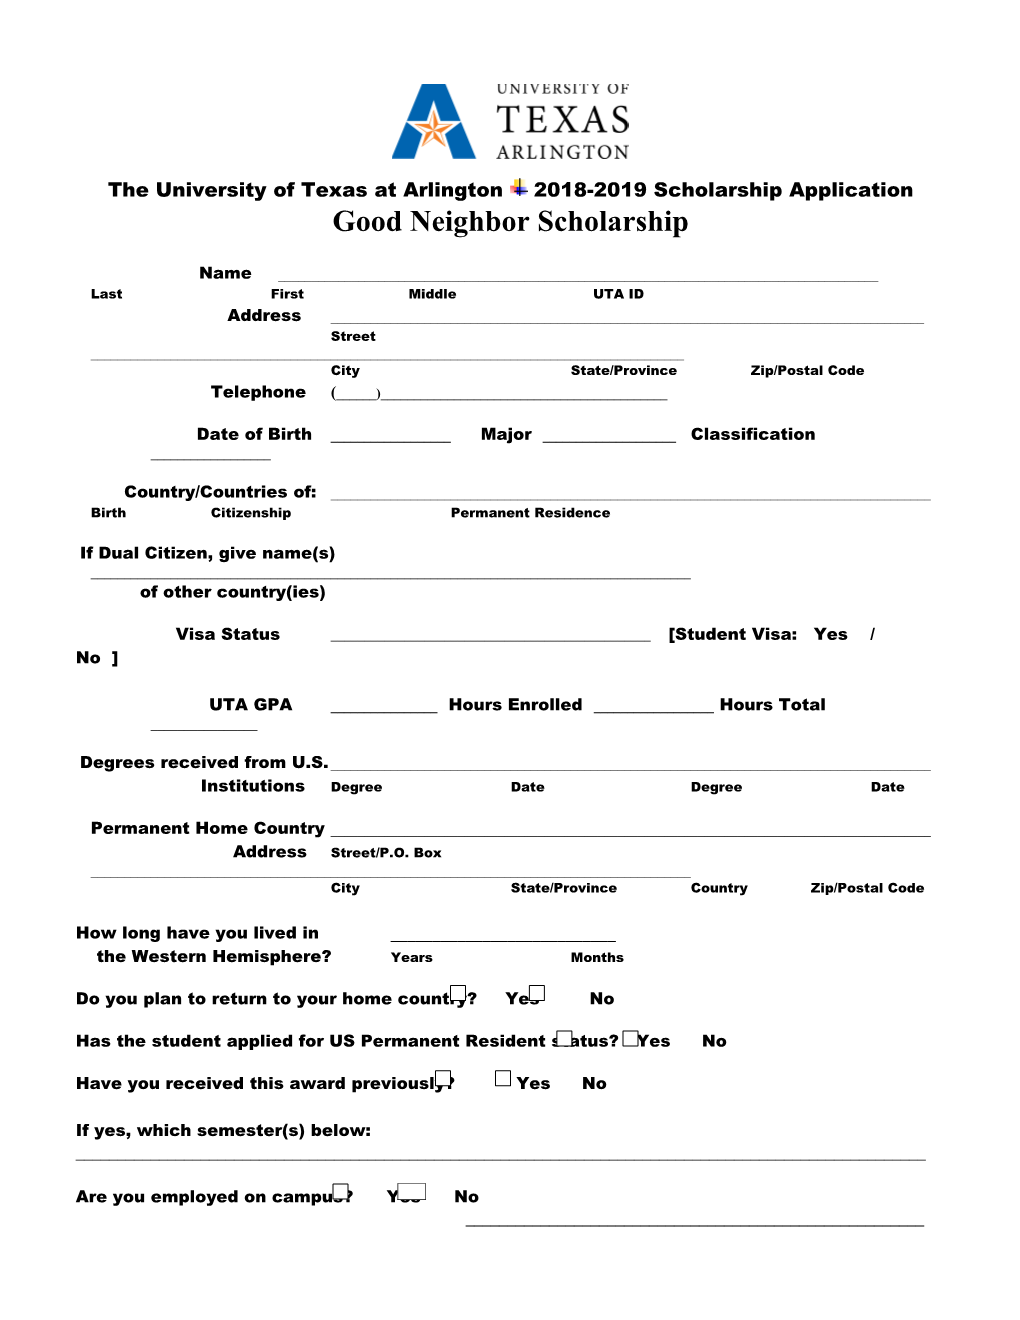 Good Neighbor Scholarship Application Page